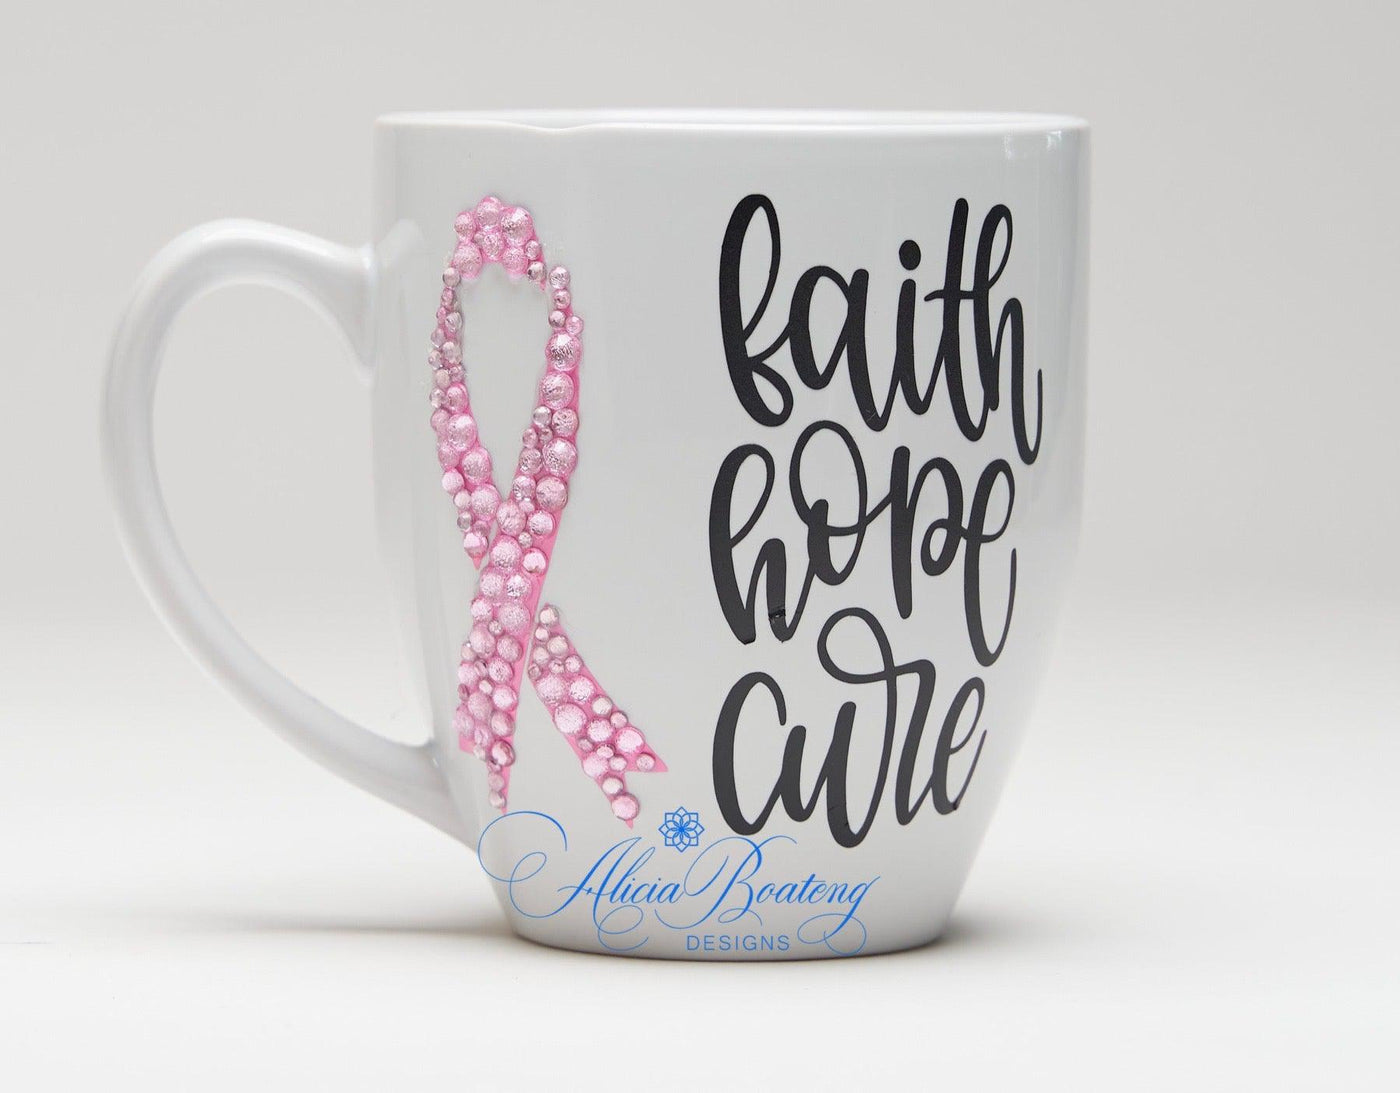 Faith, Hope, Cure, Leukemia / Kidney Coffee / Tea cup, Bling Coffee Cup,